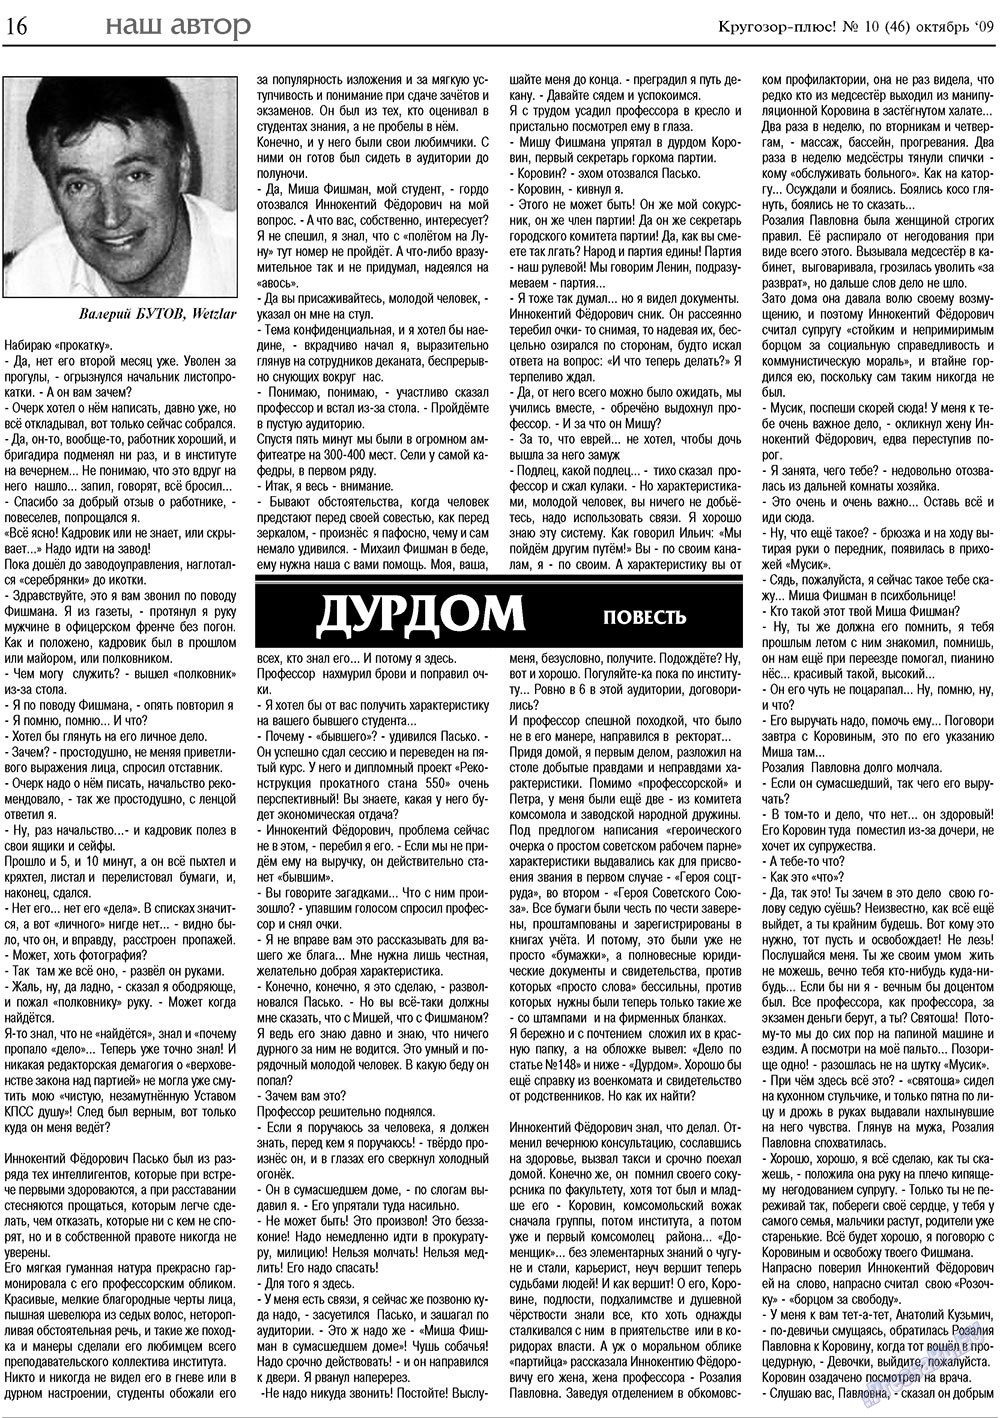 Кругозор плюс! (газета). 2009 год, номер 10, стр. 16